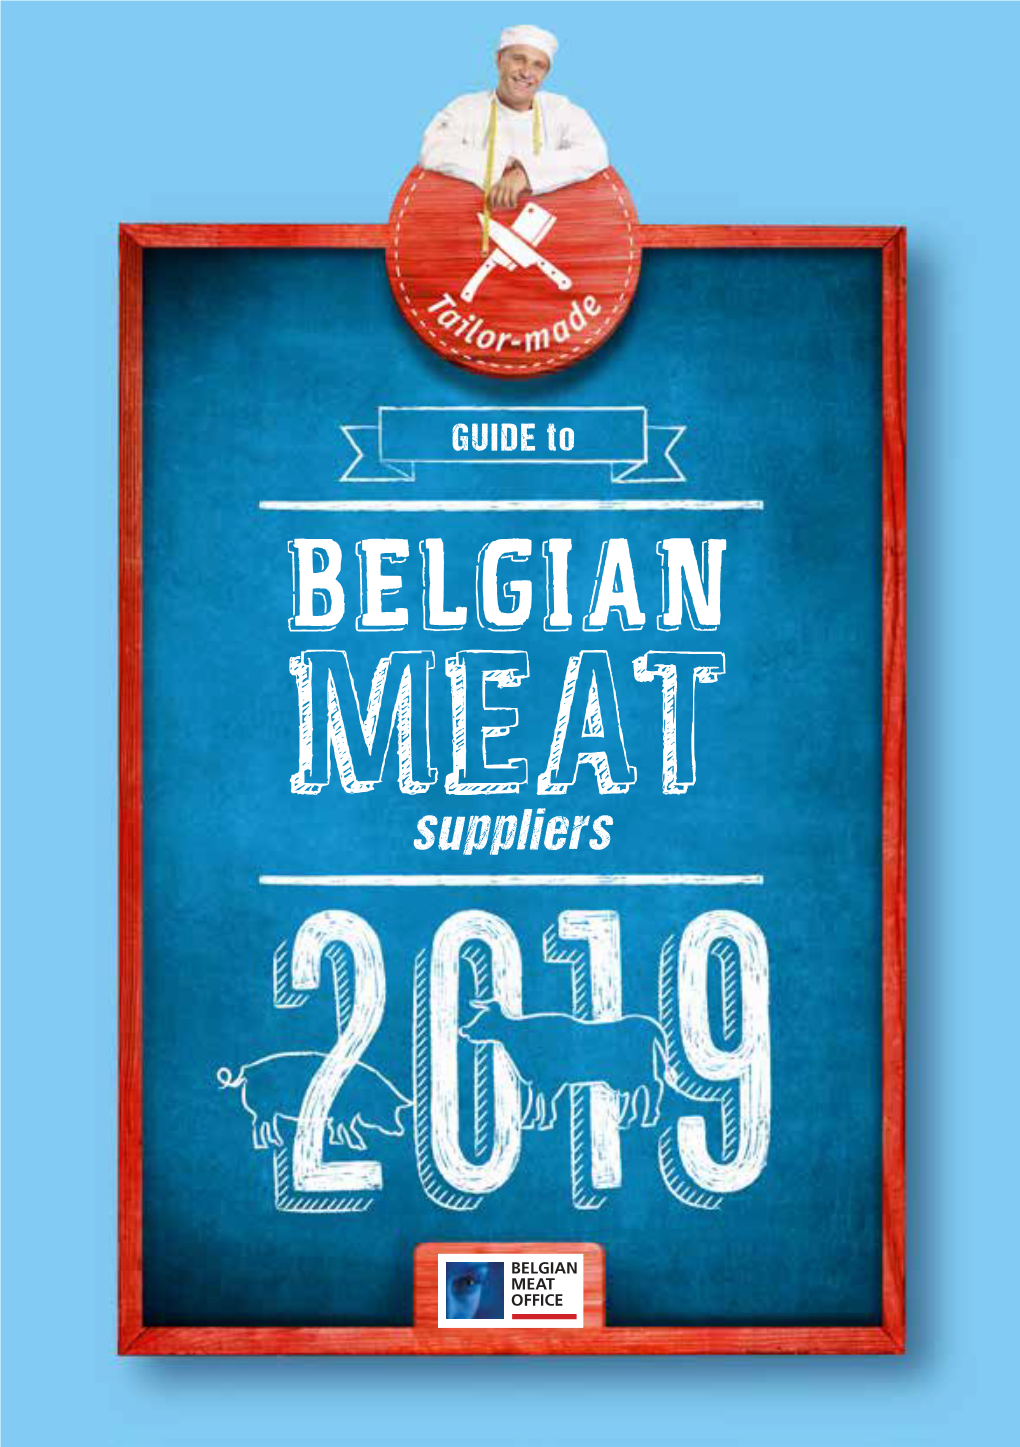 BELGIAN Meat Suppliers